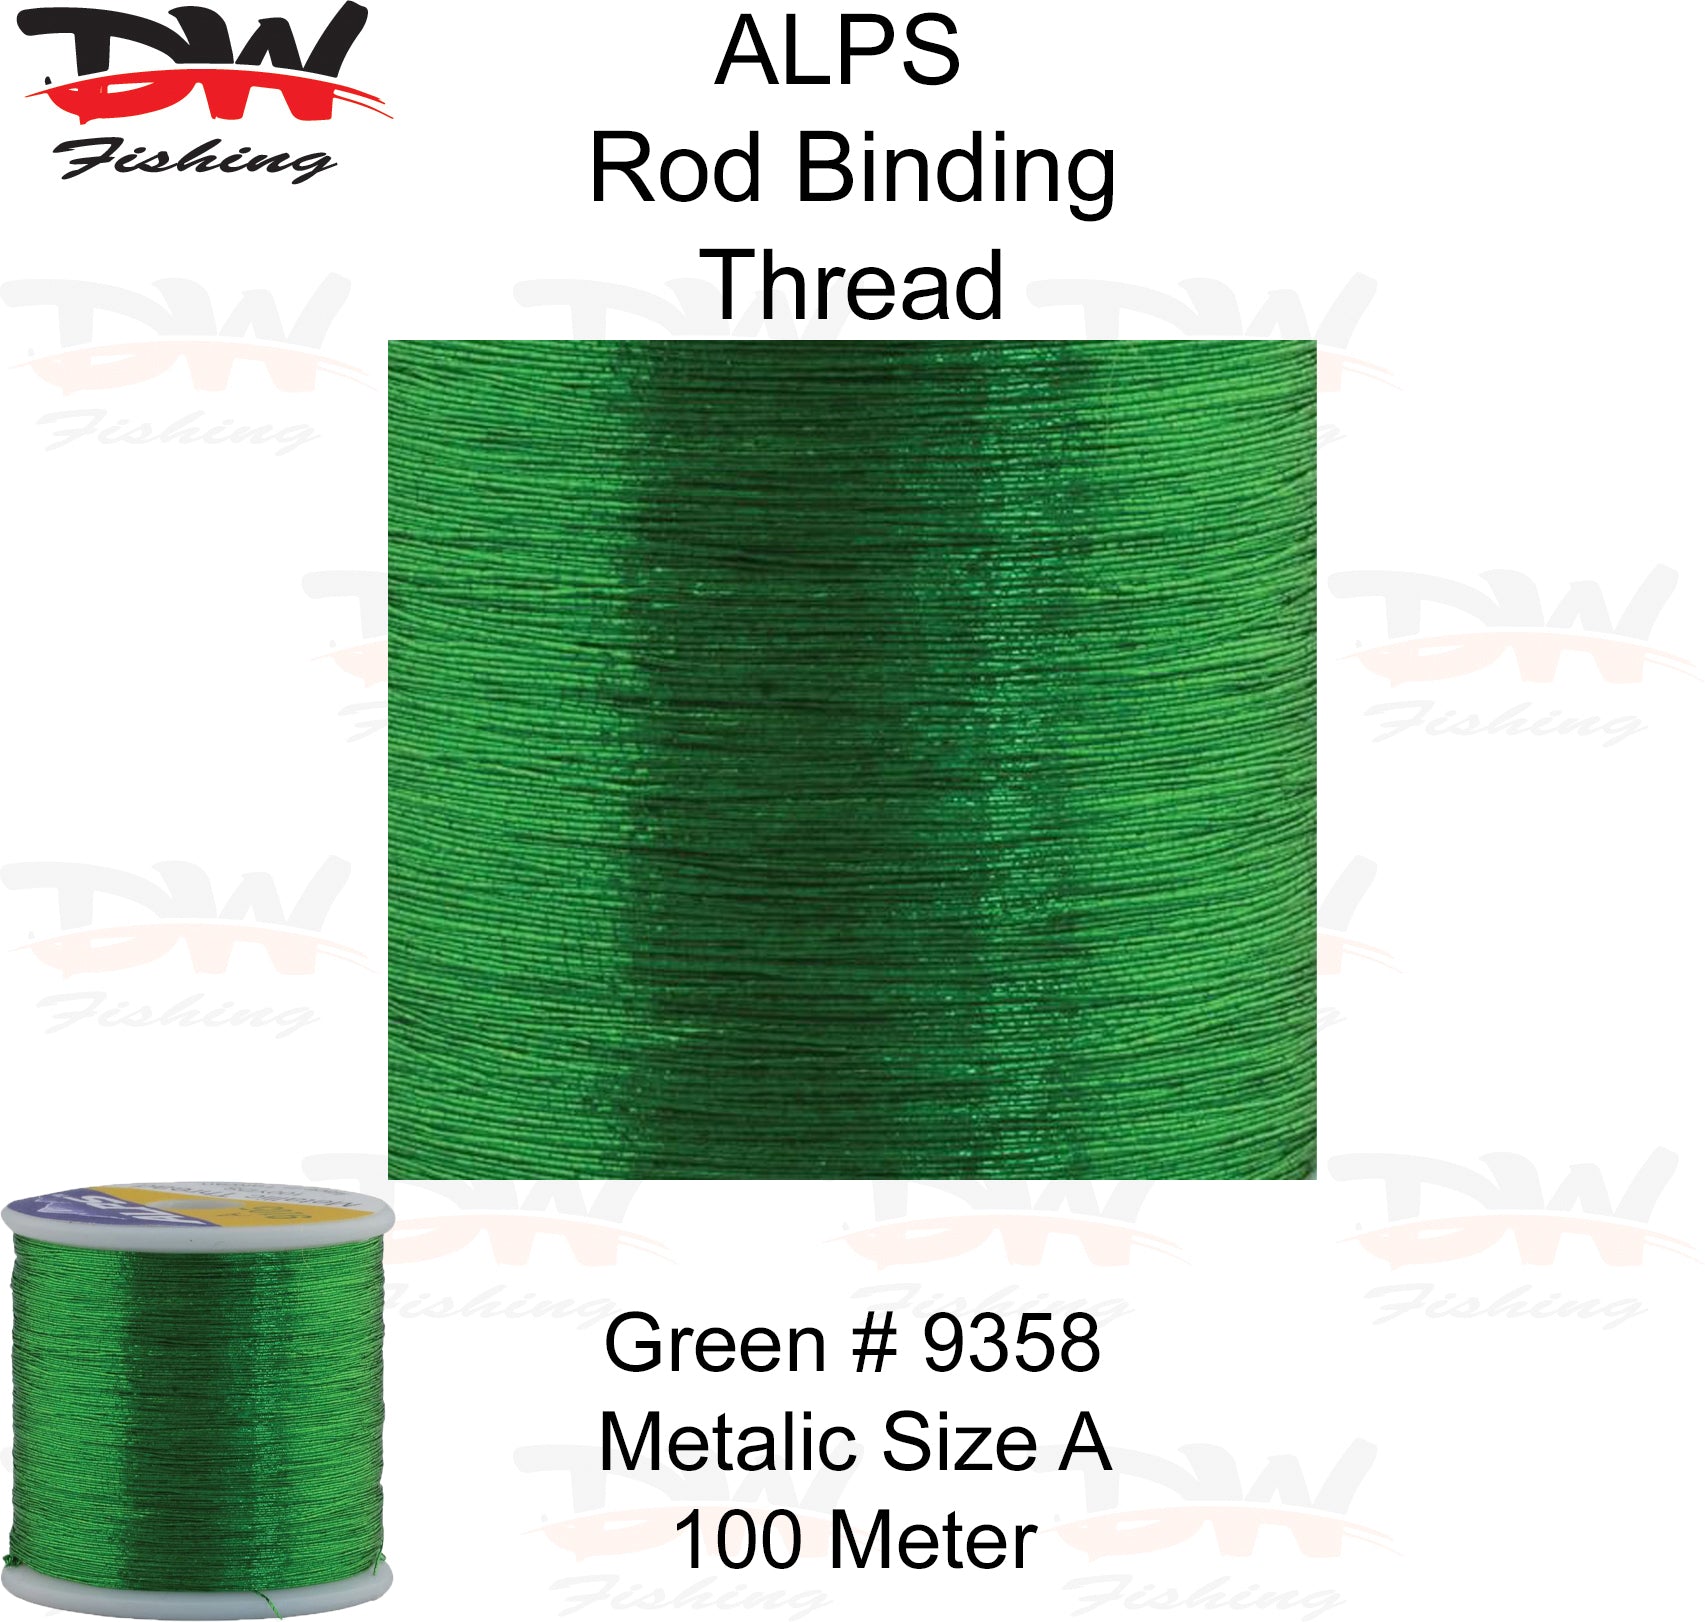 ALPS metalic rod binding thread Green